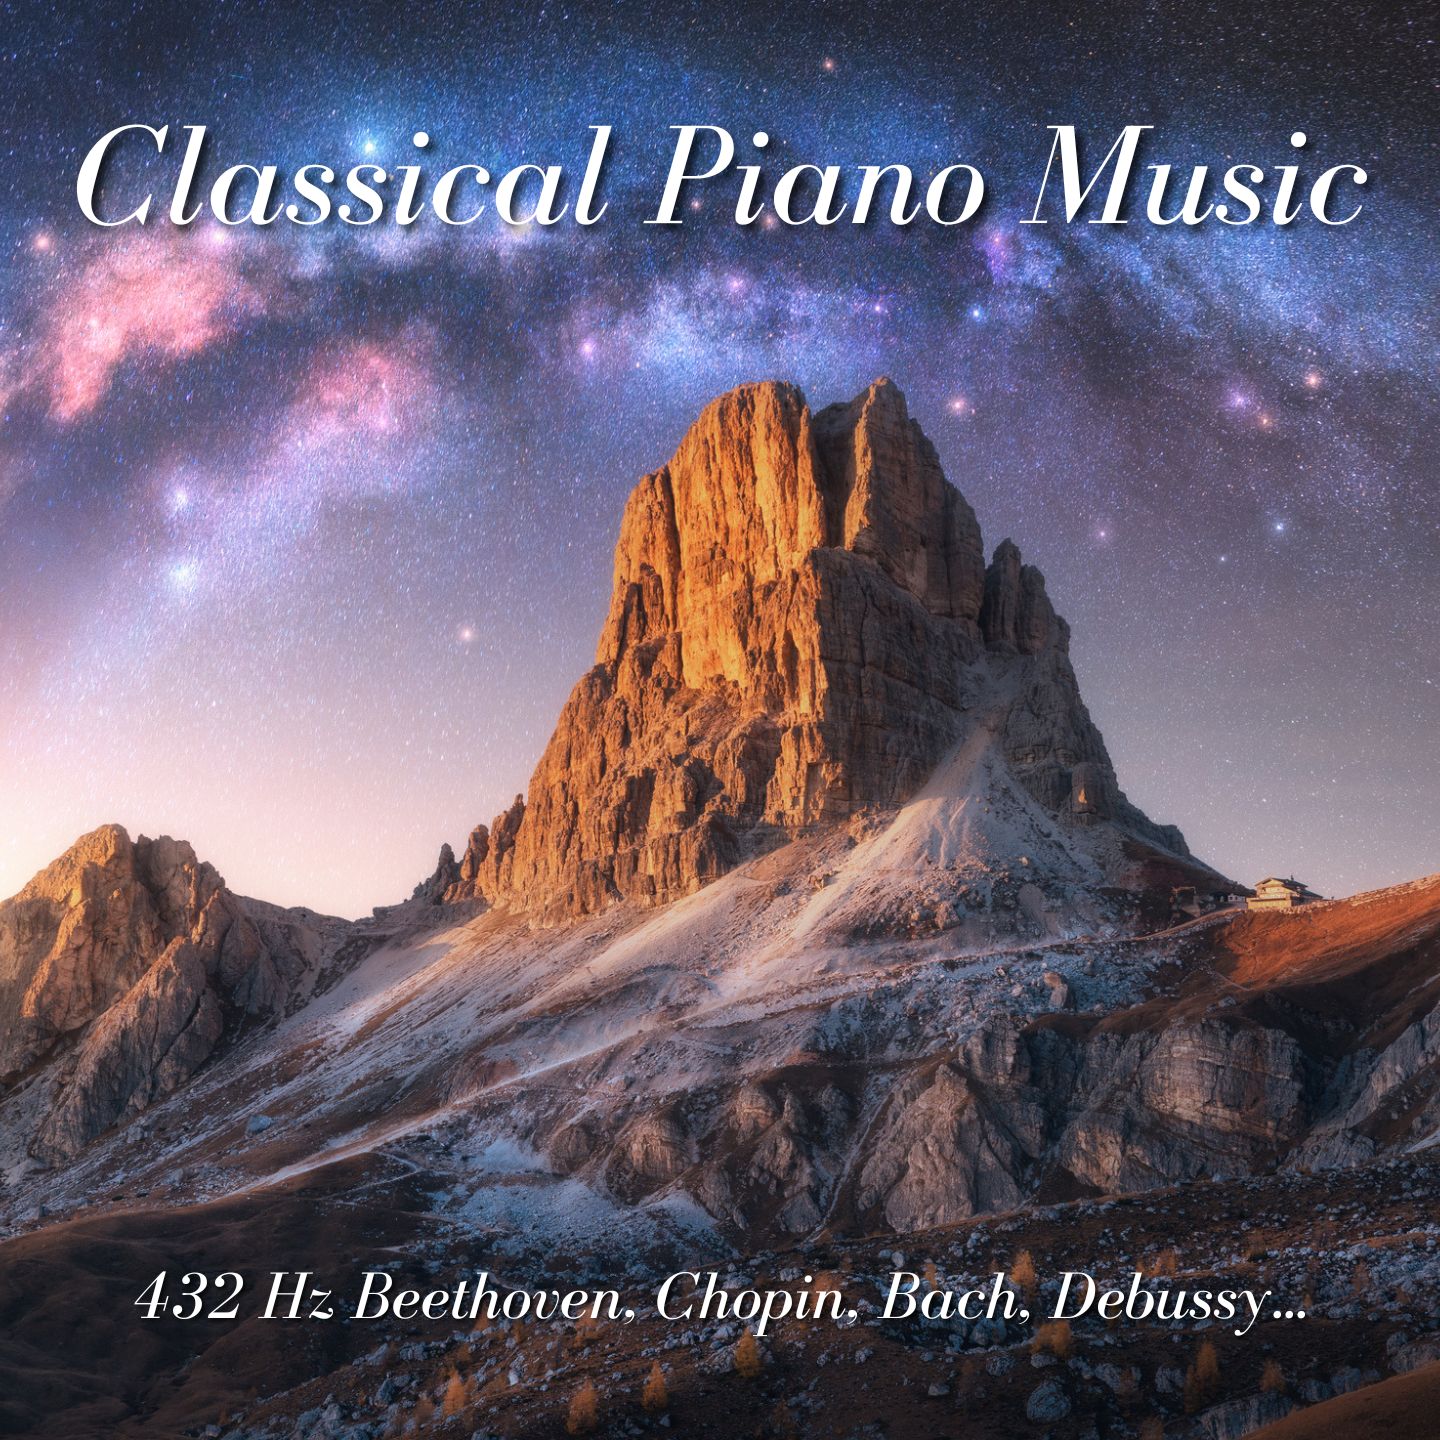 Classical Piano Music (432 Hz)